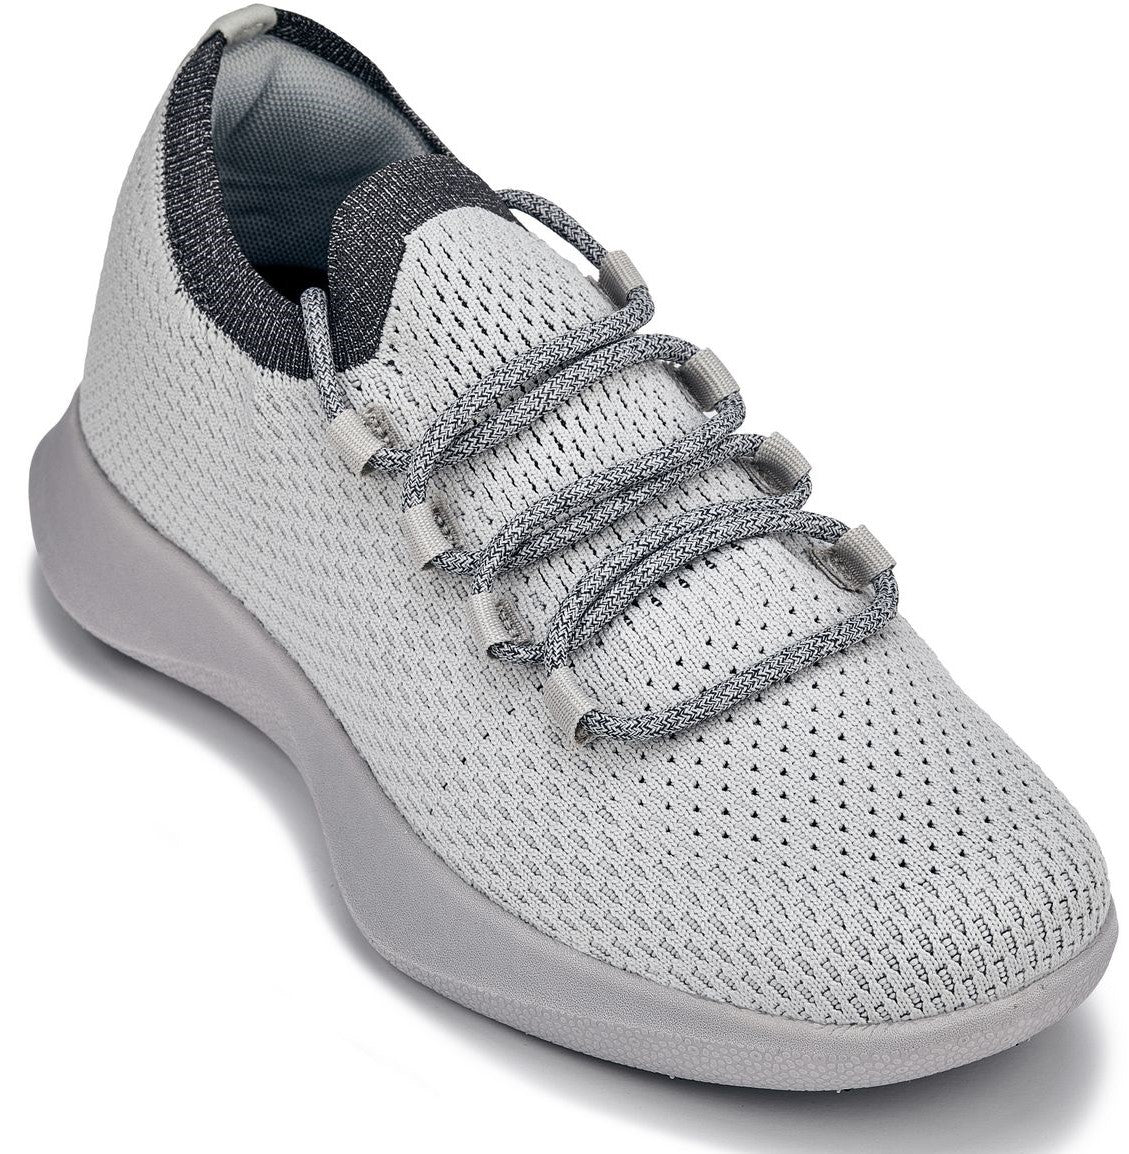 CALTO - Q087 - 2.4 بوصة أطول (رمادي ثلجي) - أحذية رياضية خفيفة الوزن للغاية